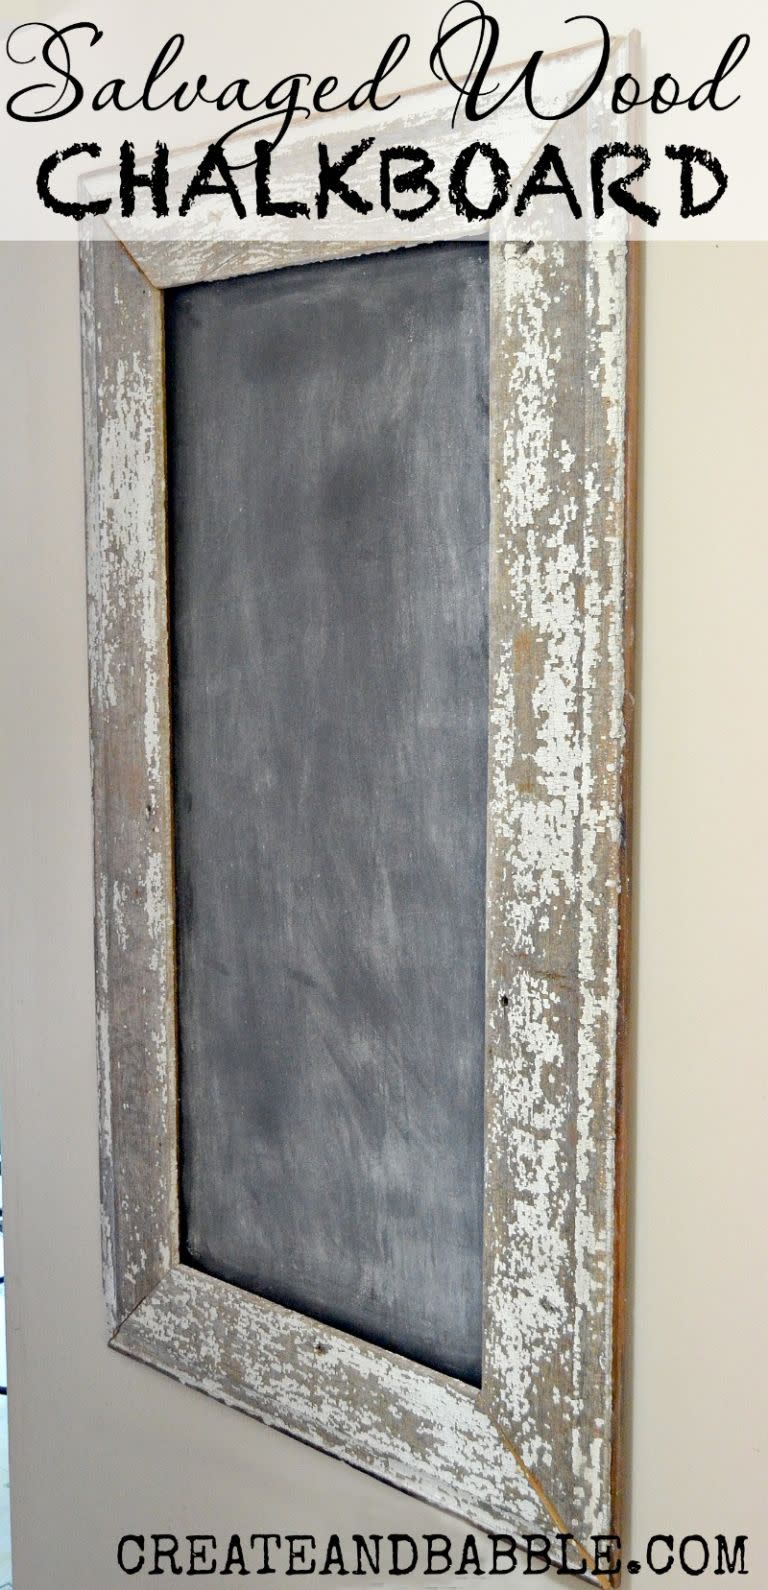 Salvaged Wood Chalkboard